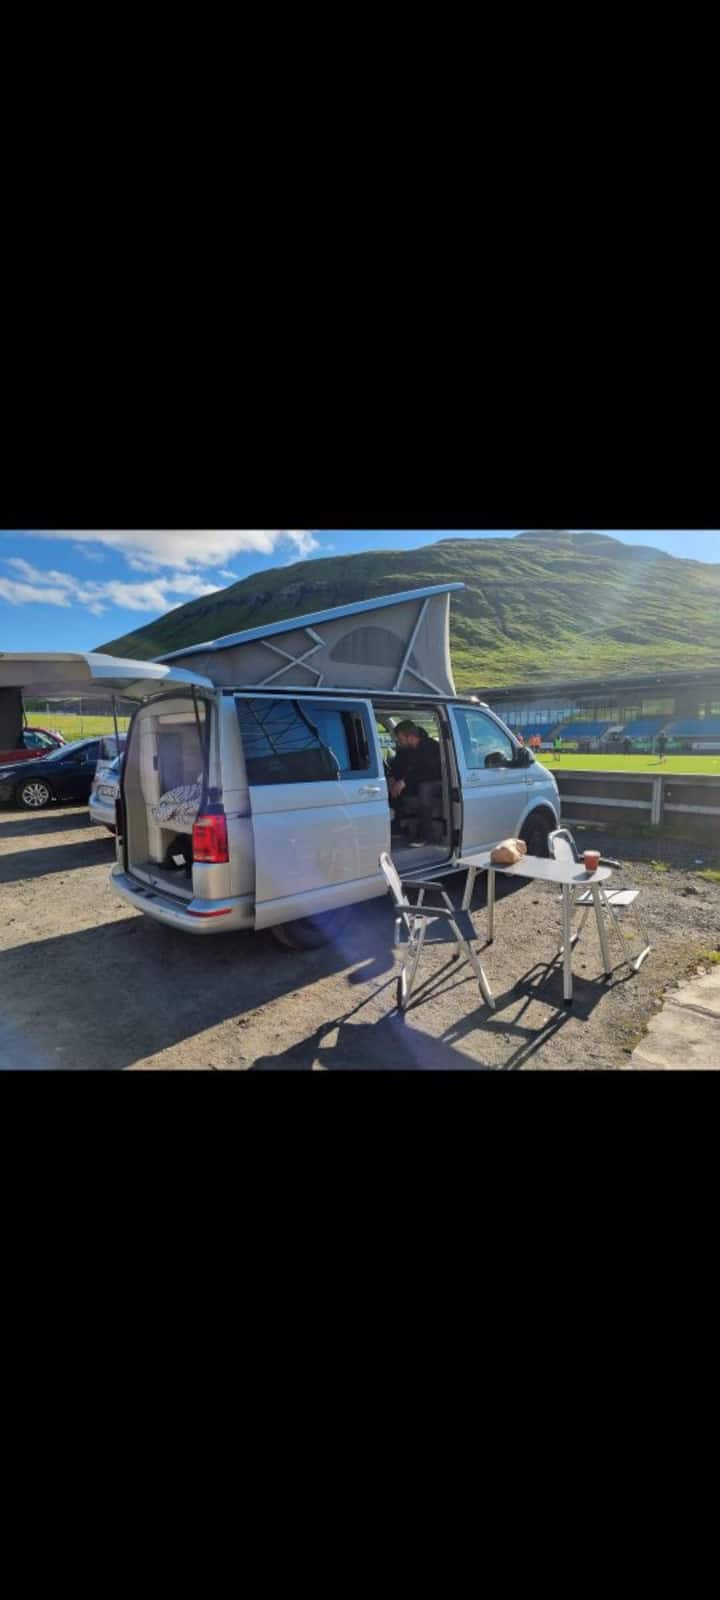 Autocamper - Faroe Islands